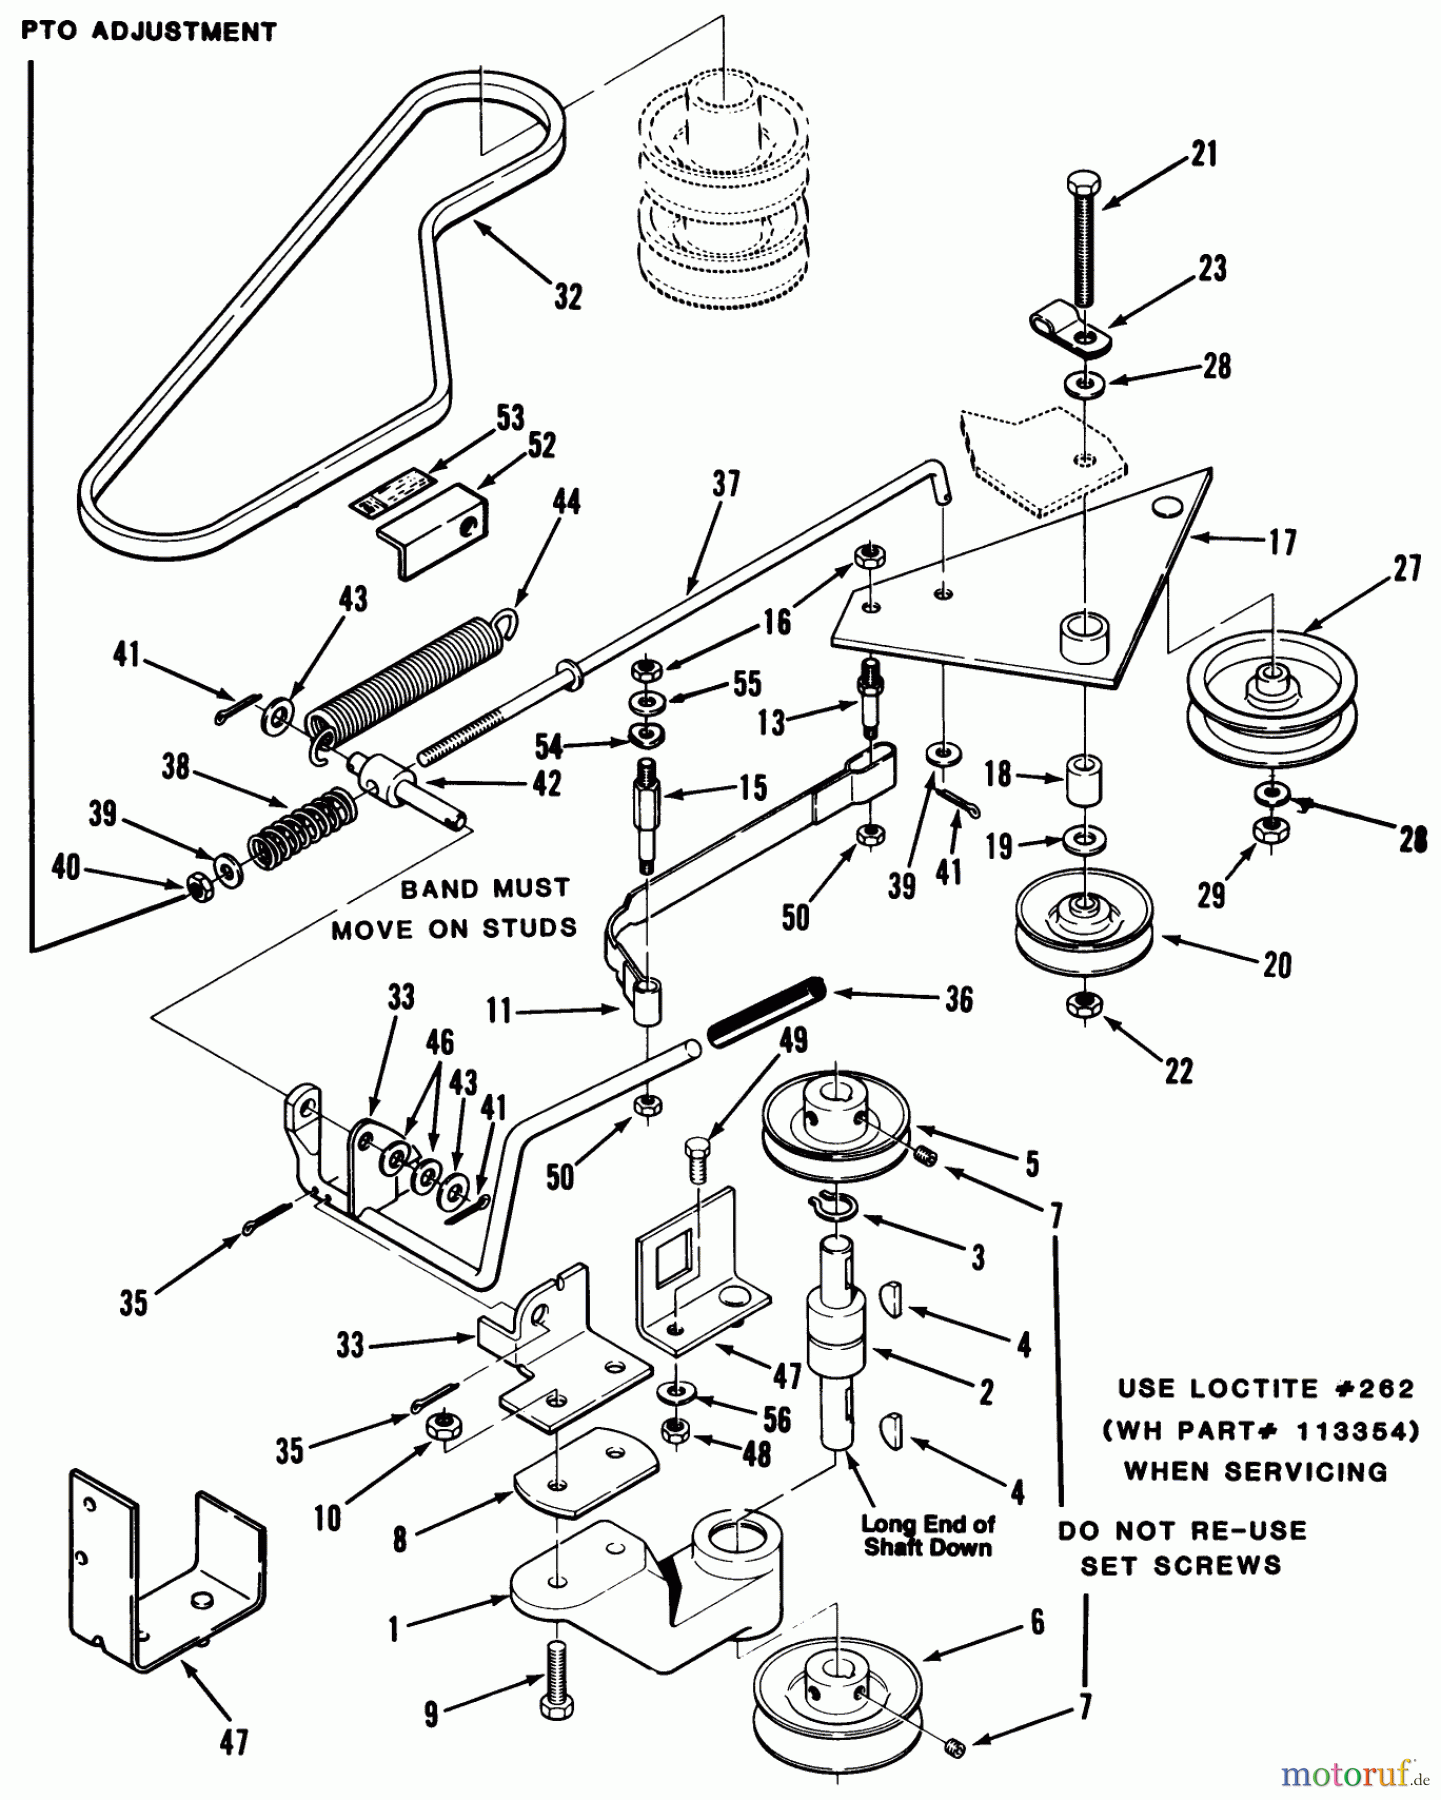  Toro Neu Mowers, Rear-Engine Rider B3-08B391 (108-3) - Toro 108-3 Rear Engine Rider, 1987 PTO CLUTCH, PULLEYS, AND CONTROLS